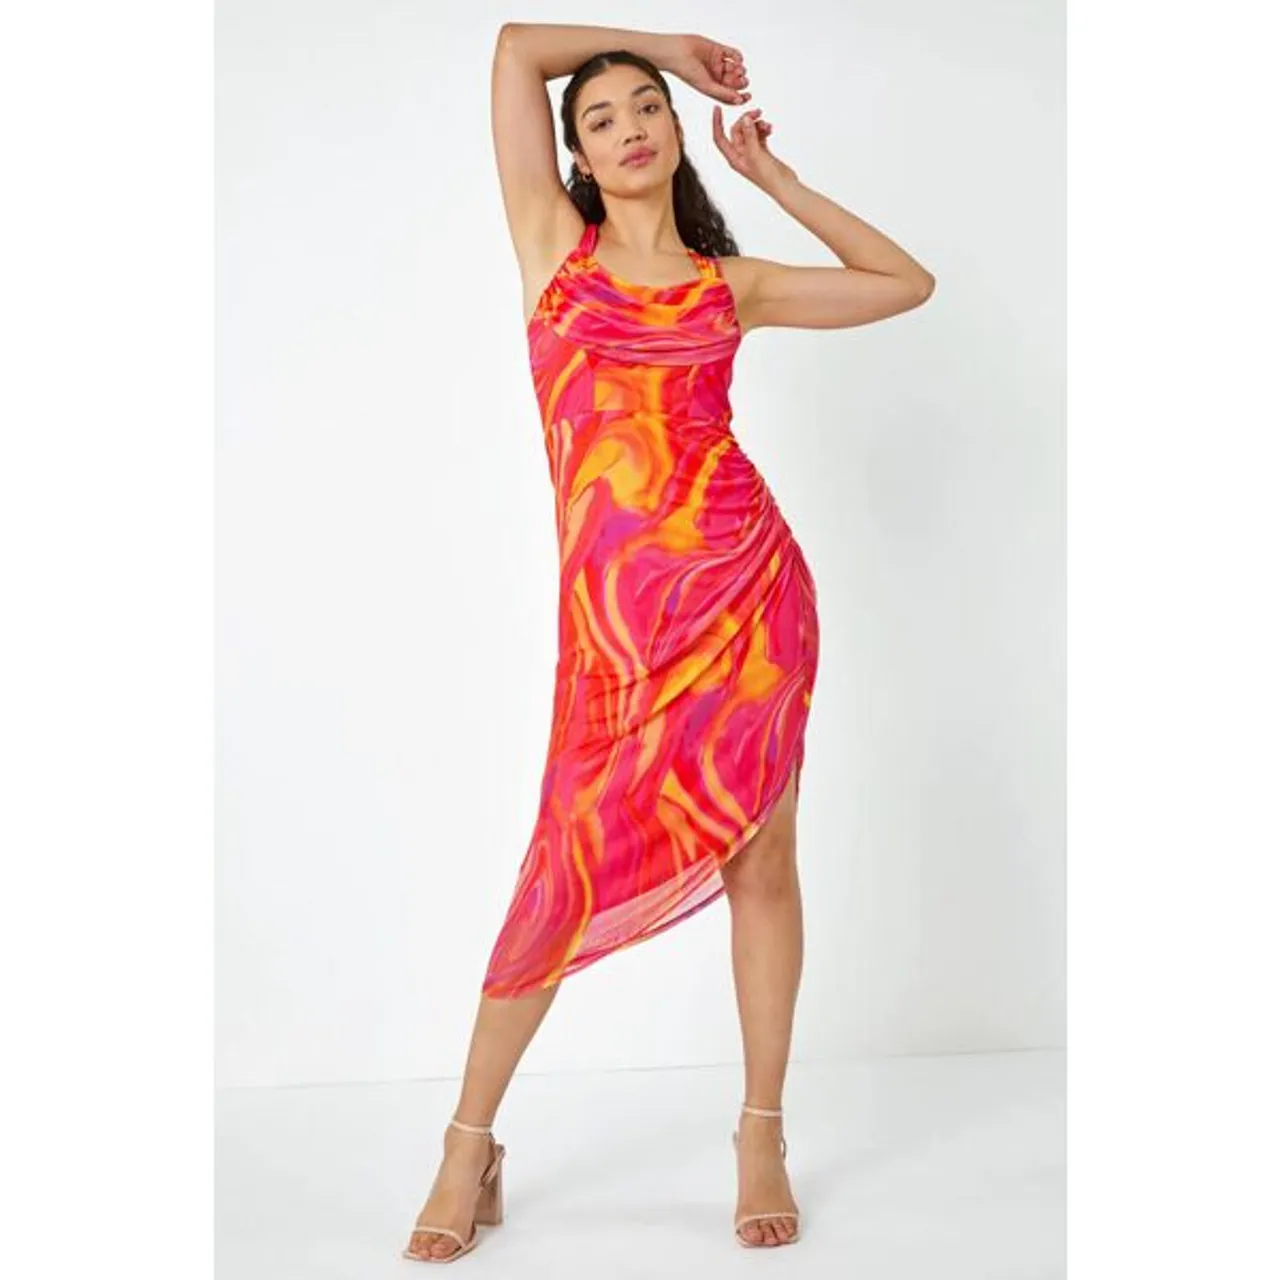 Dusk Fashion Swirl Print Ruched Stretch Dress in Pink 16 female